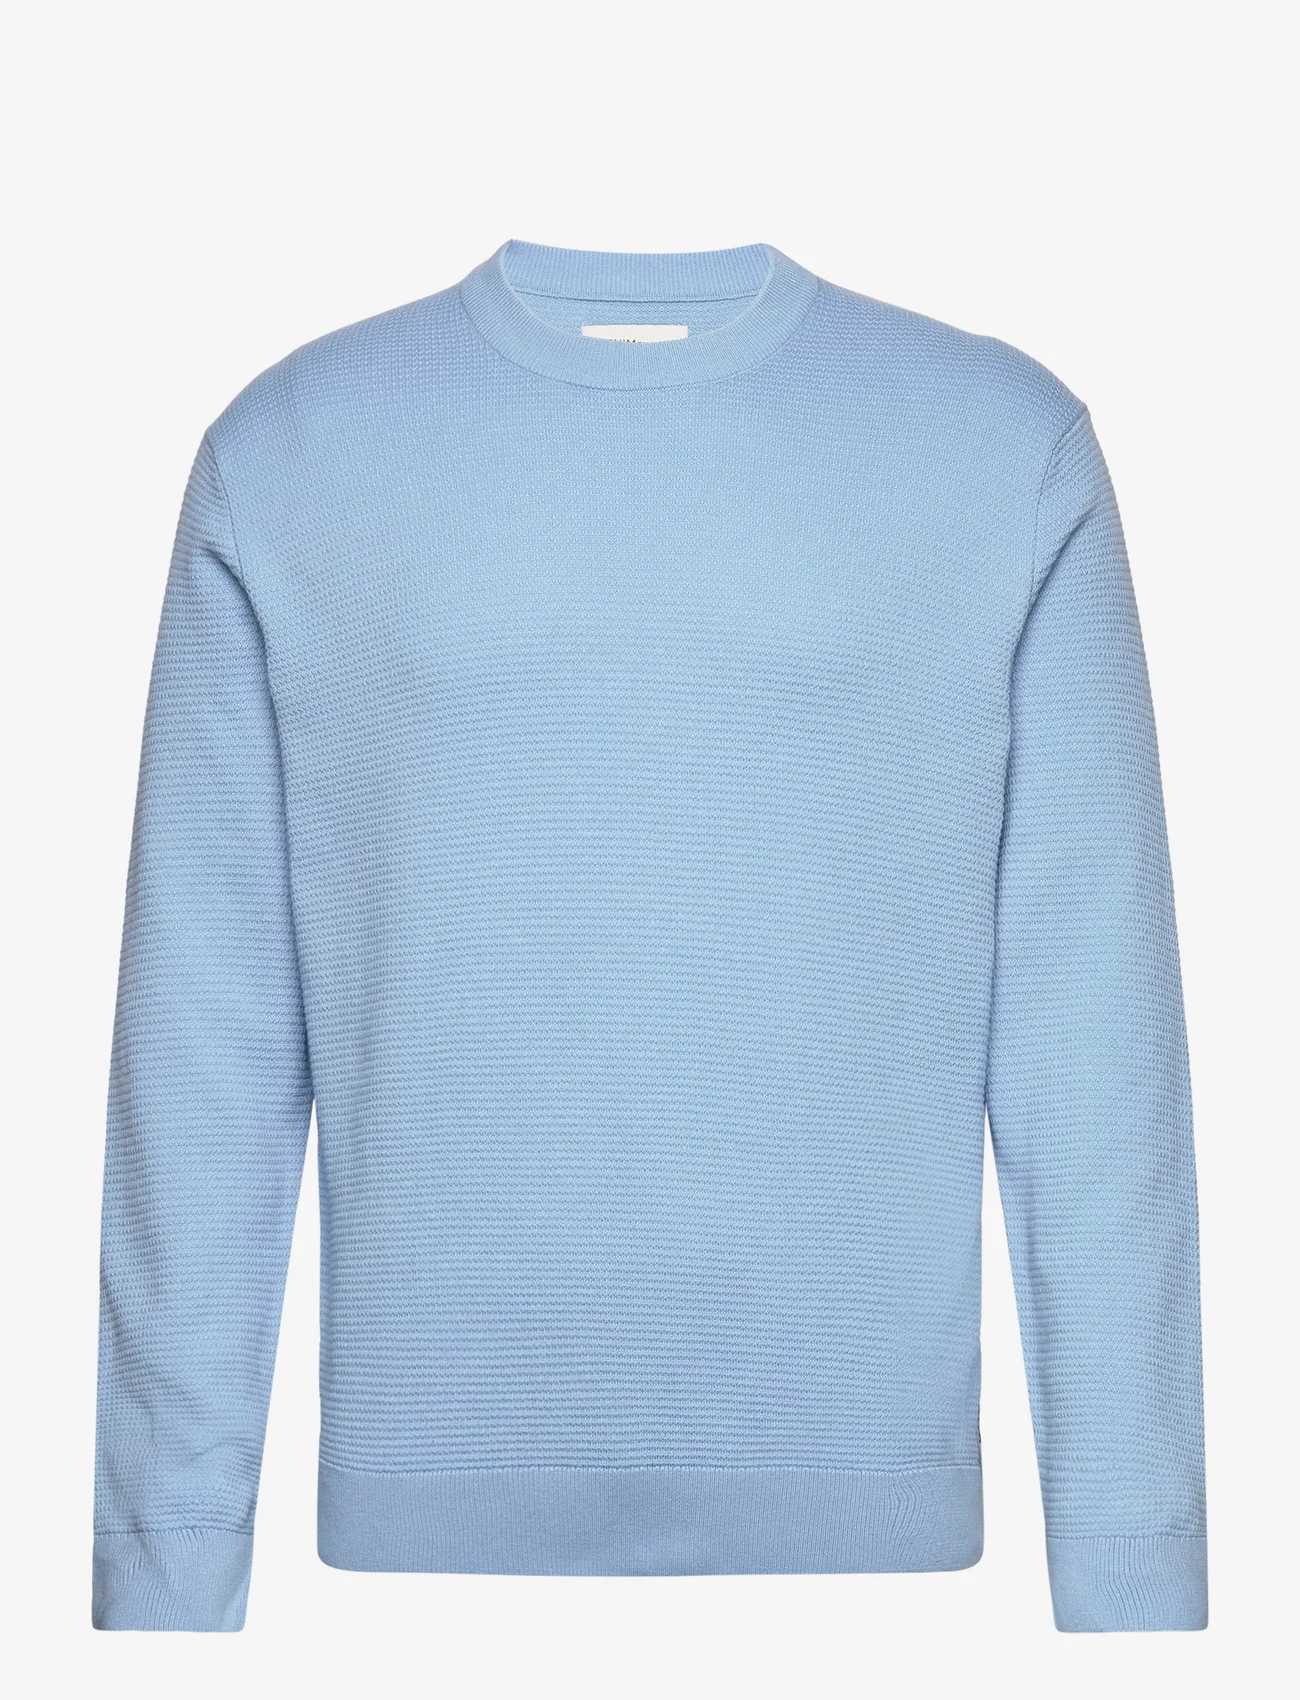 Tom Tailor - structured basic knit - pyöreäaukkoiset - washed out middle blue - 0